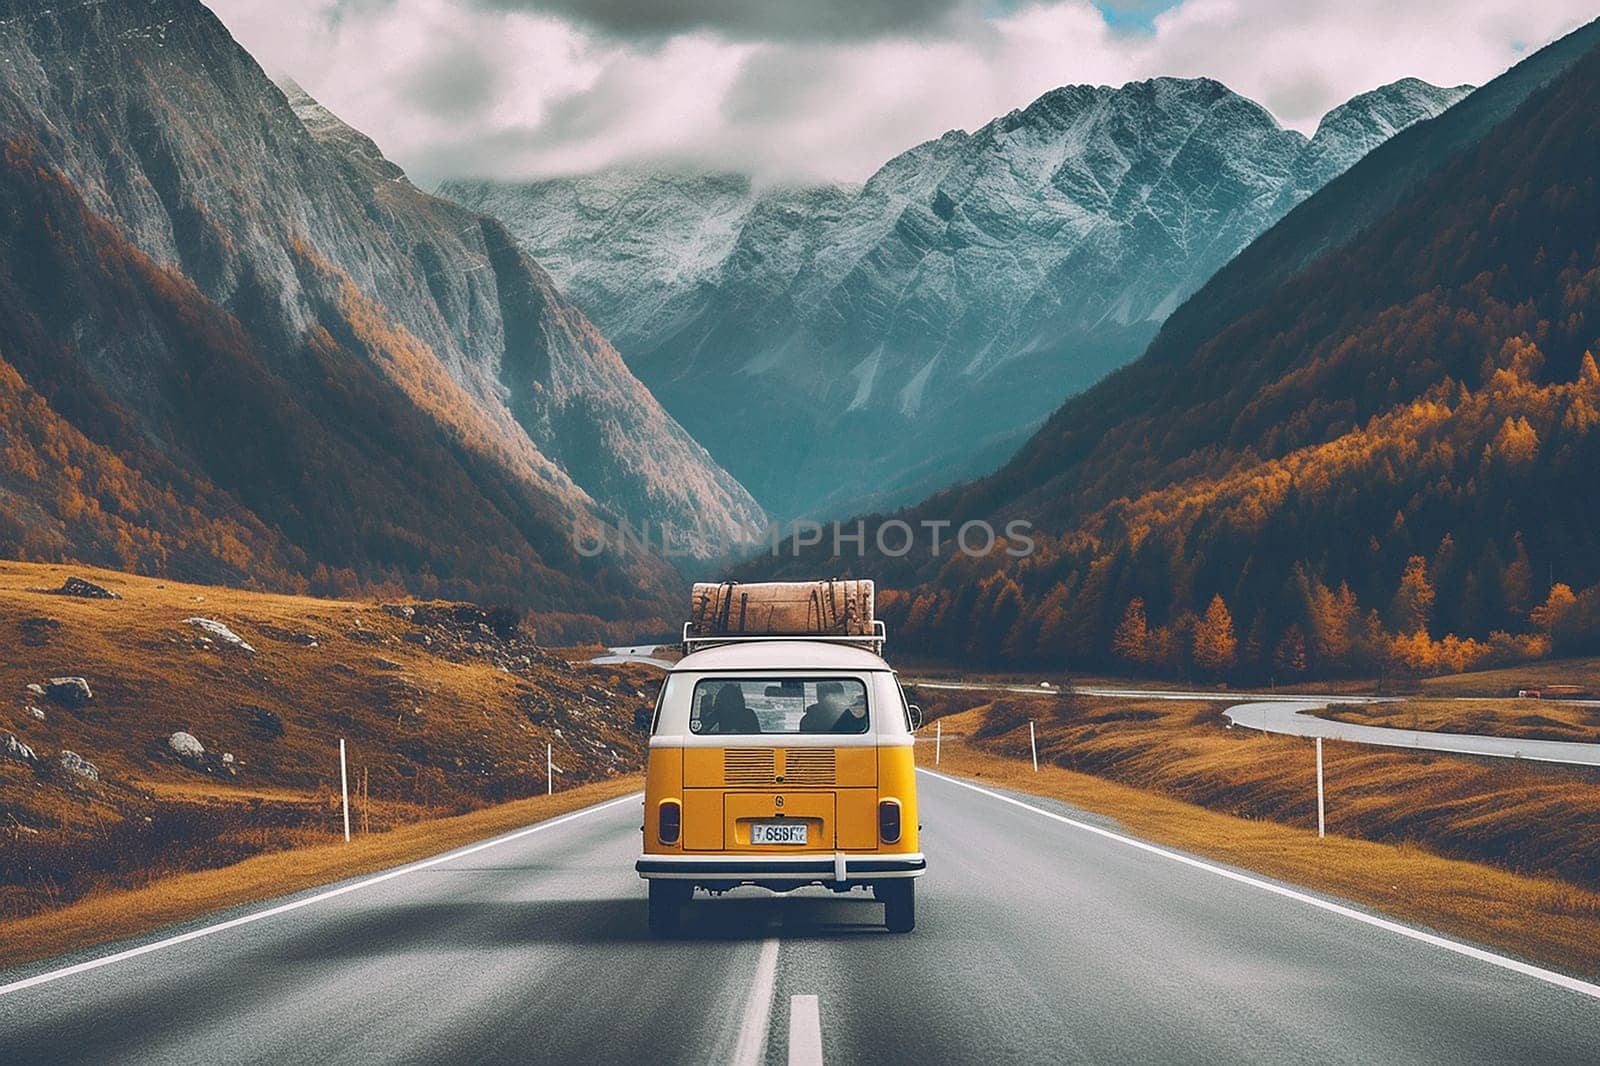 Vintage yellow van driving through mountainous landscape with autumn foliage. by Hype2art